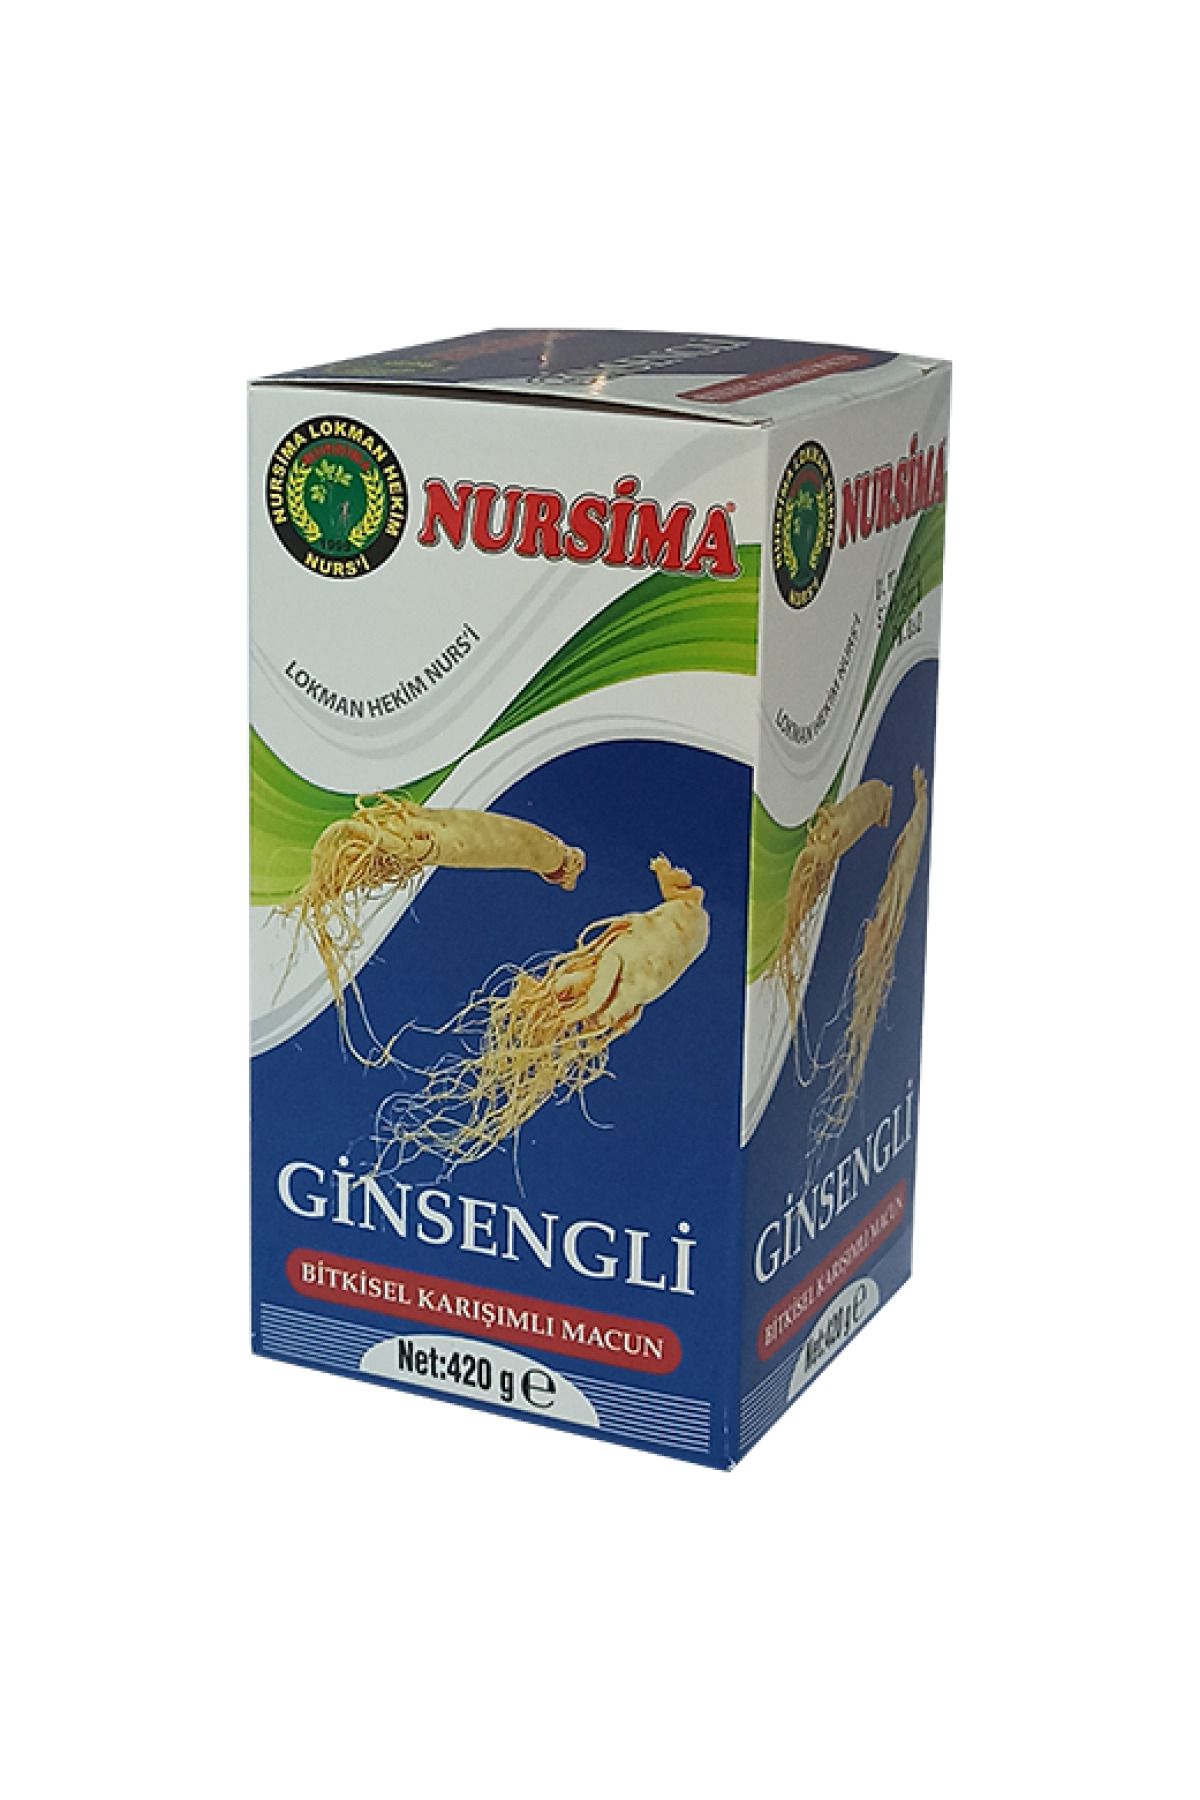 Nursima Findit Ginsengli Bitkisel Karışımlı Macun 420 gr (Findit)